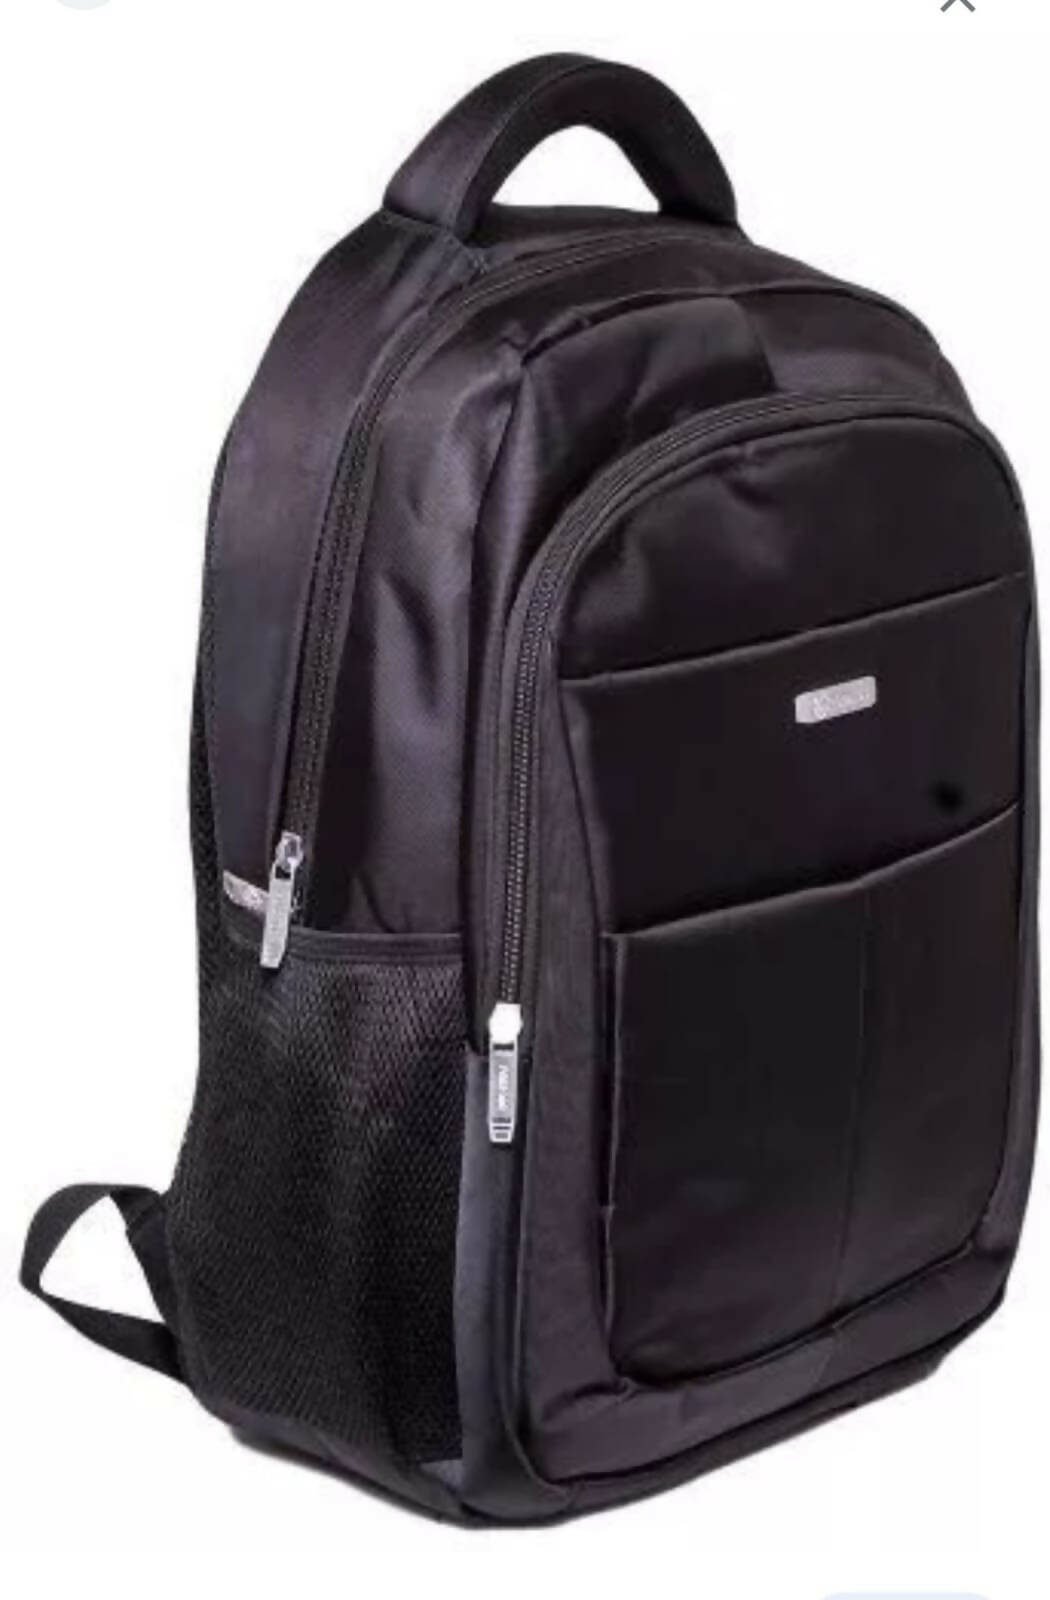 Prime Series Backpack bag